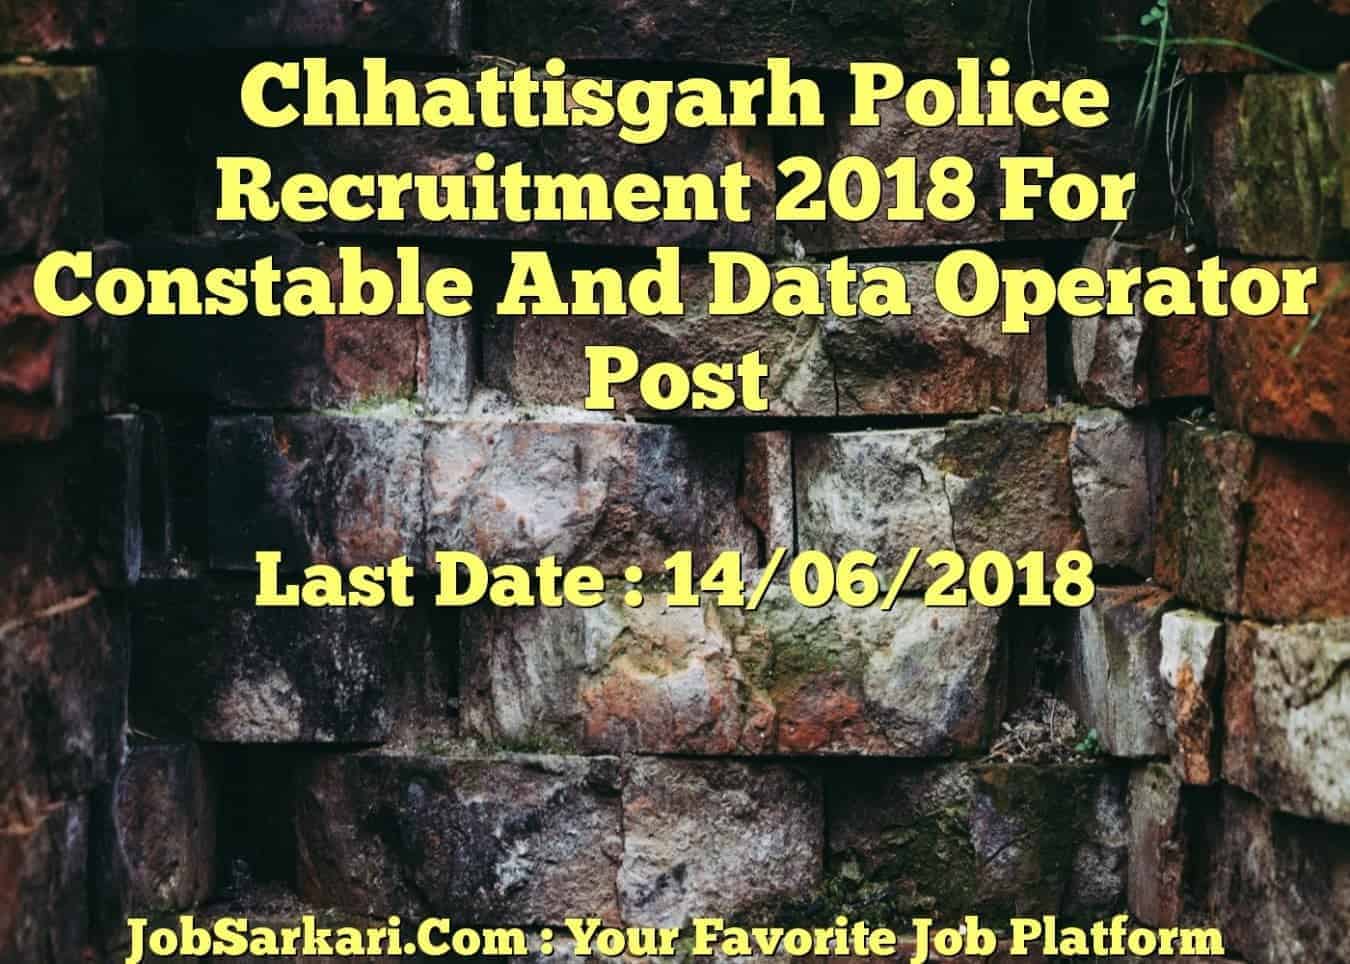 Chhattisgarh Police Recruitment 2018 For Constable And Data Operator Post